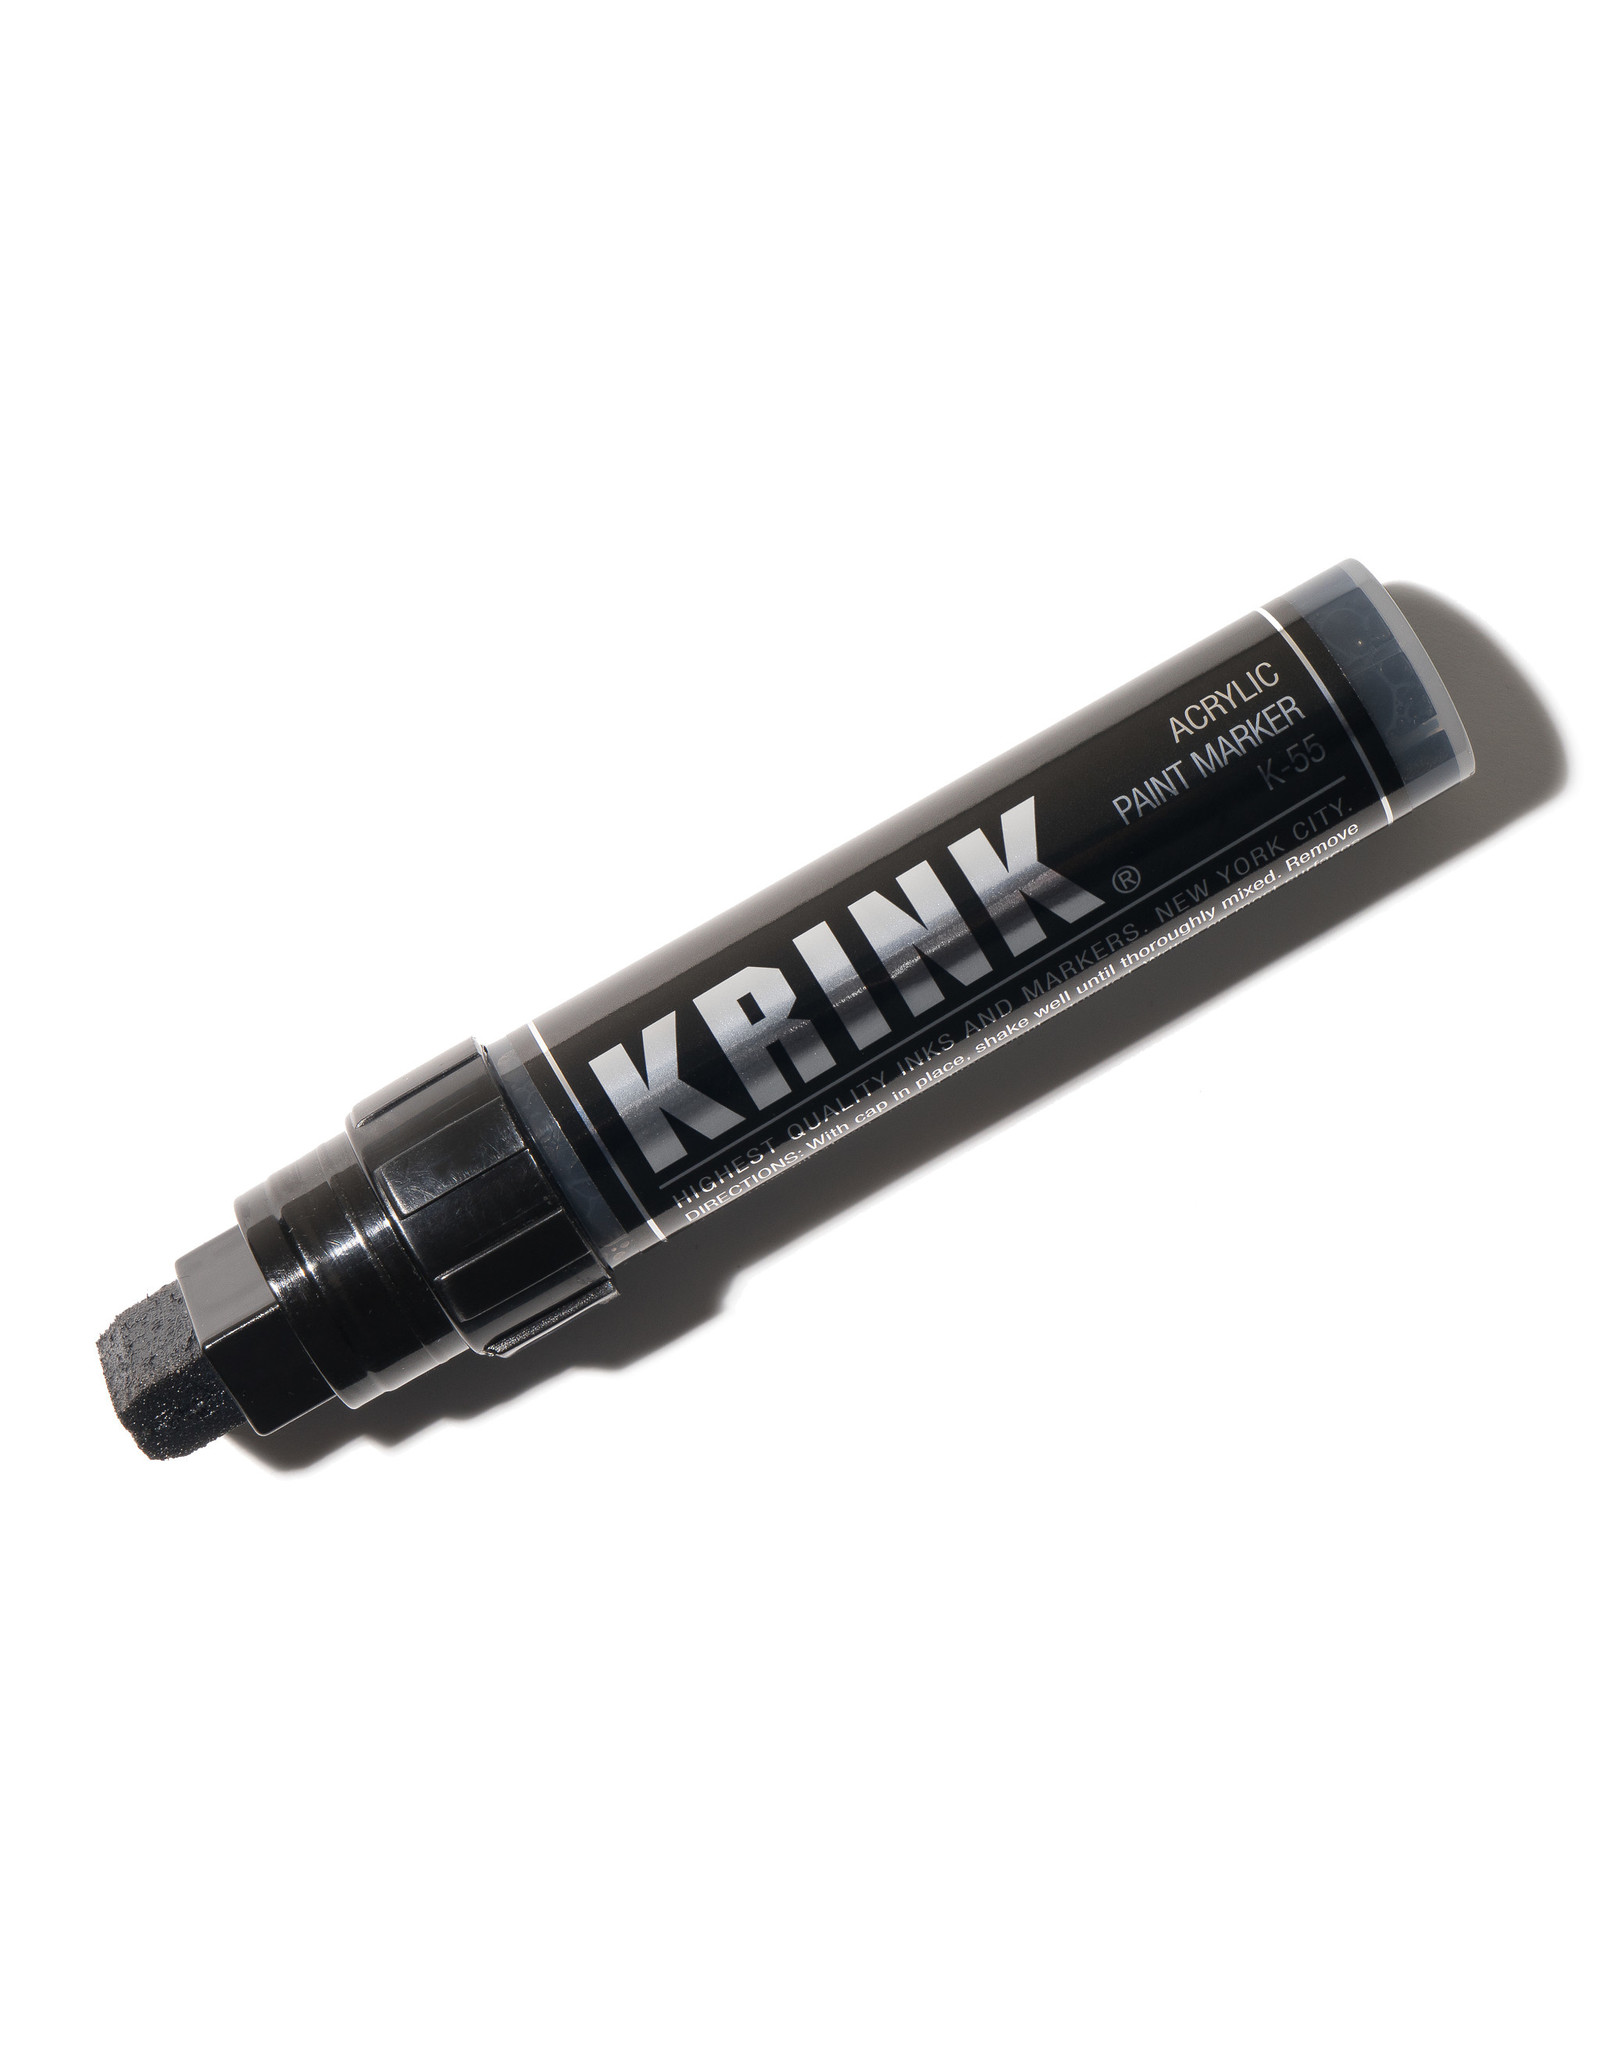 Krink Krink K-55 Acrylic Paint Marker, Black